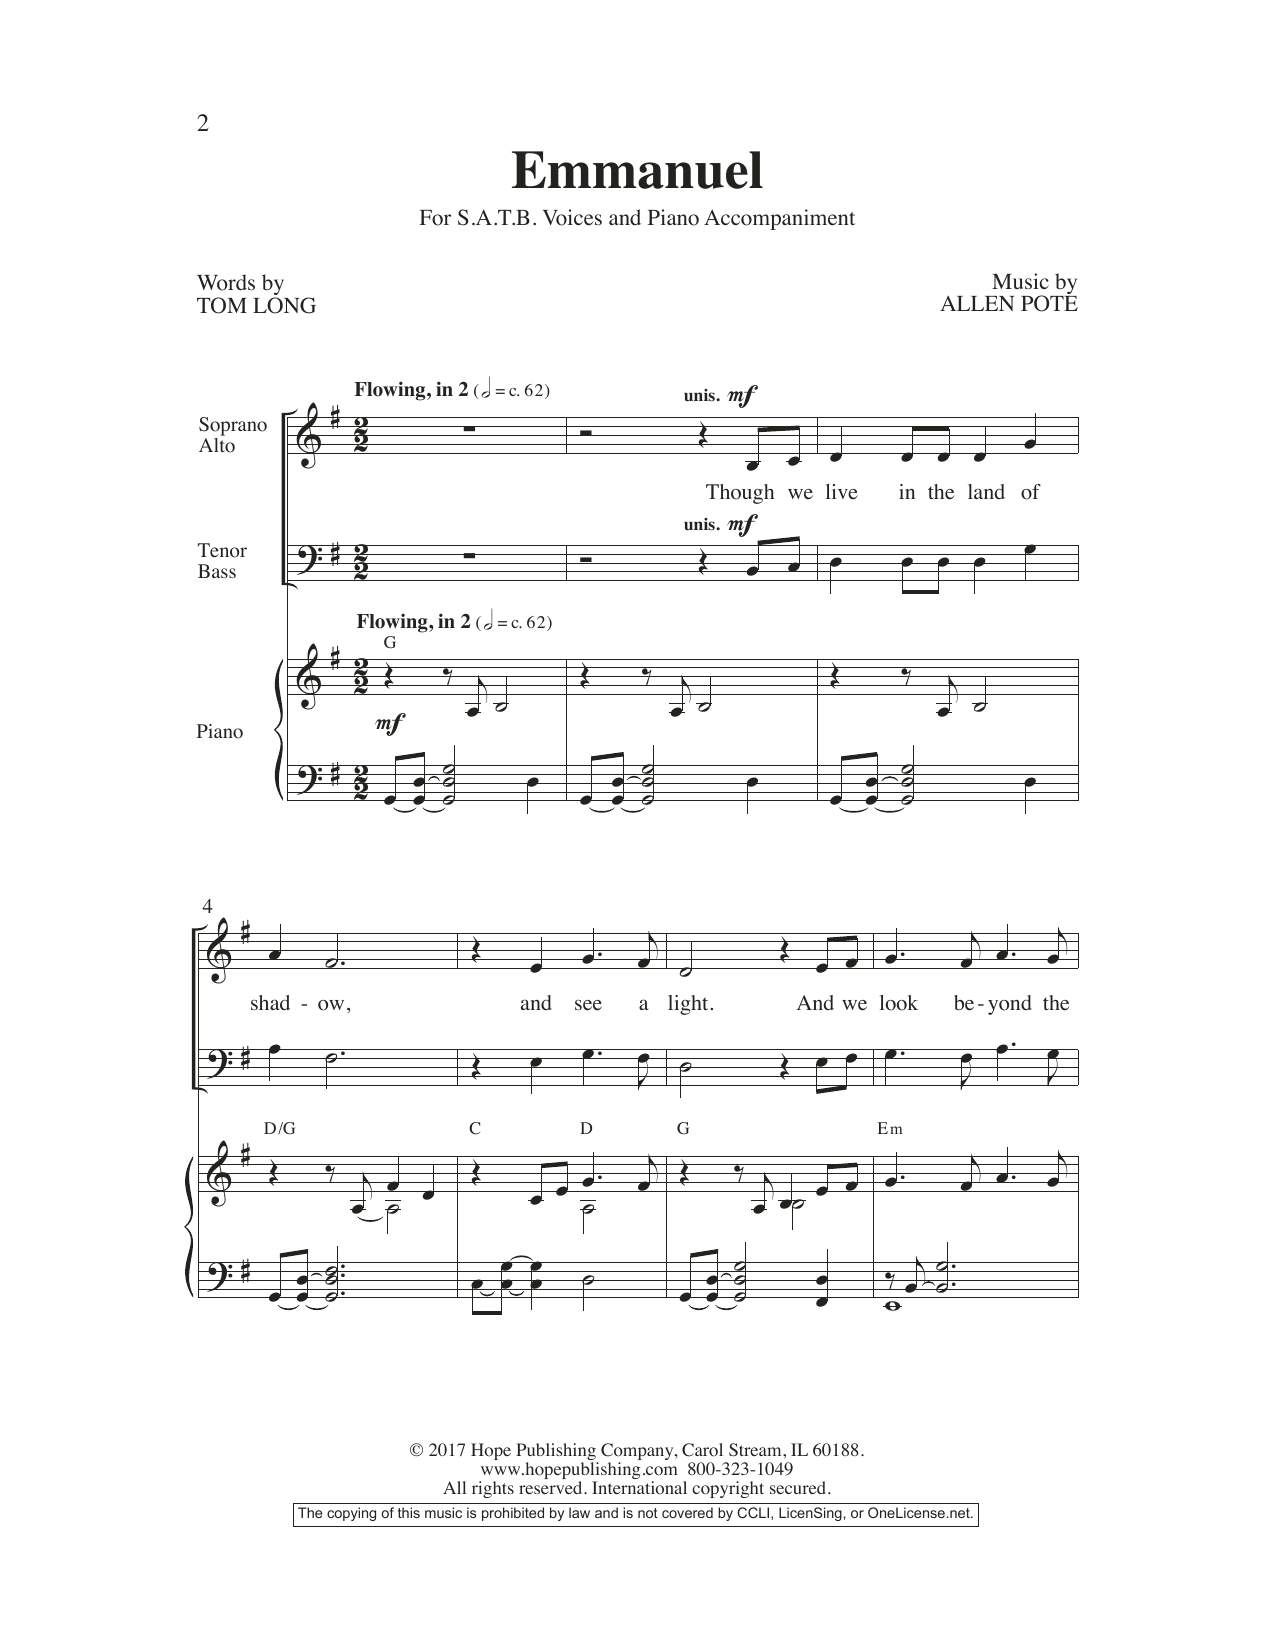 Allen Pote Emmanuel Sheet Music Notes & Chords for Choir - Download or Print PDF